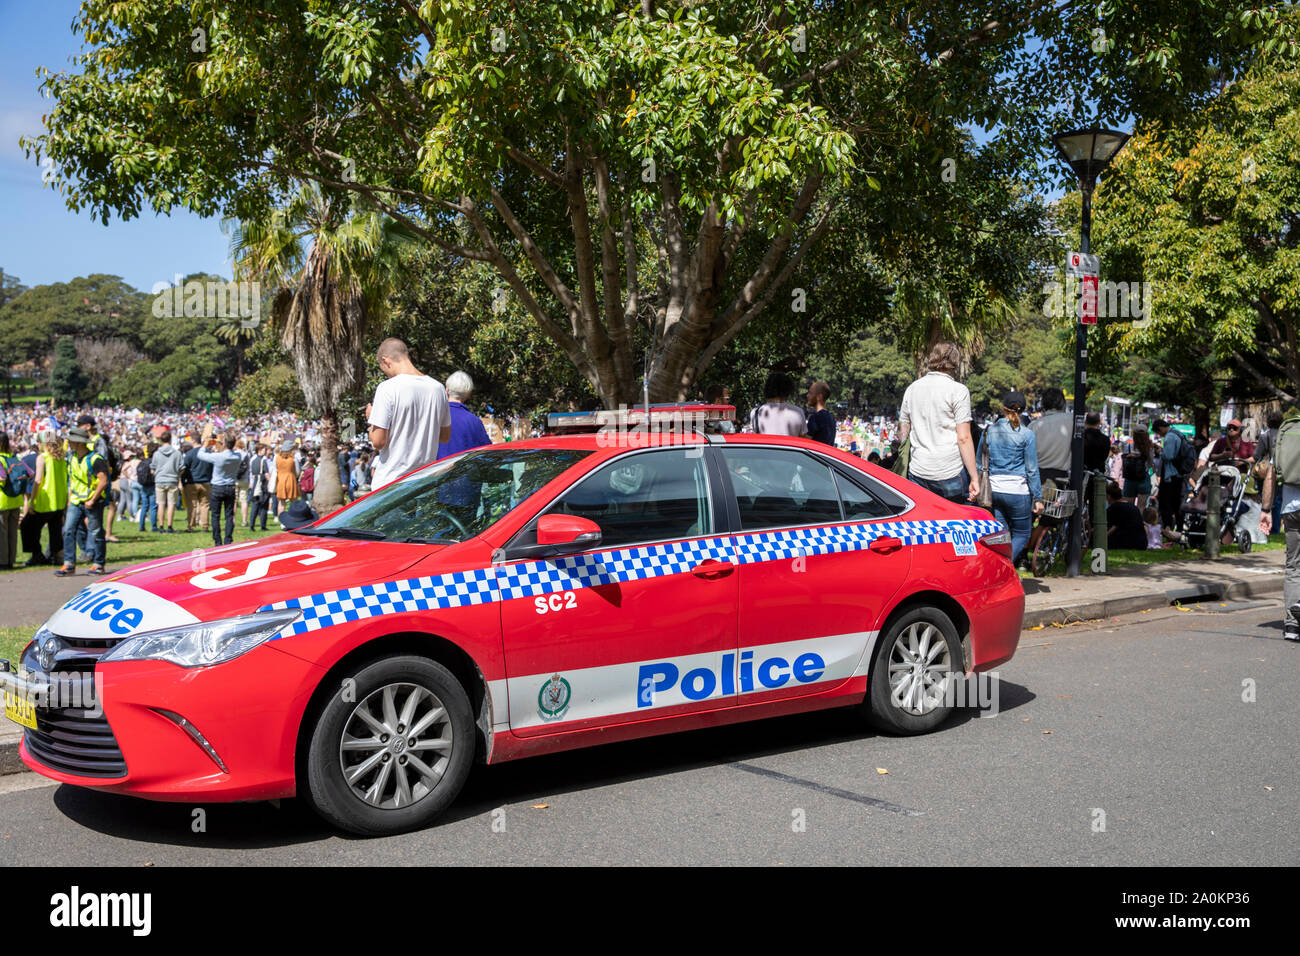 Sydney police vehicle at the sydney climate change rally in Hyde Park,Sydney,Australia Stock Photo